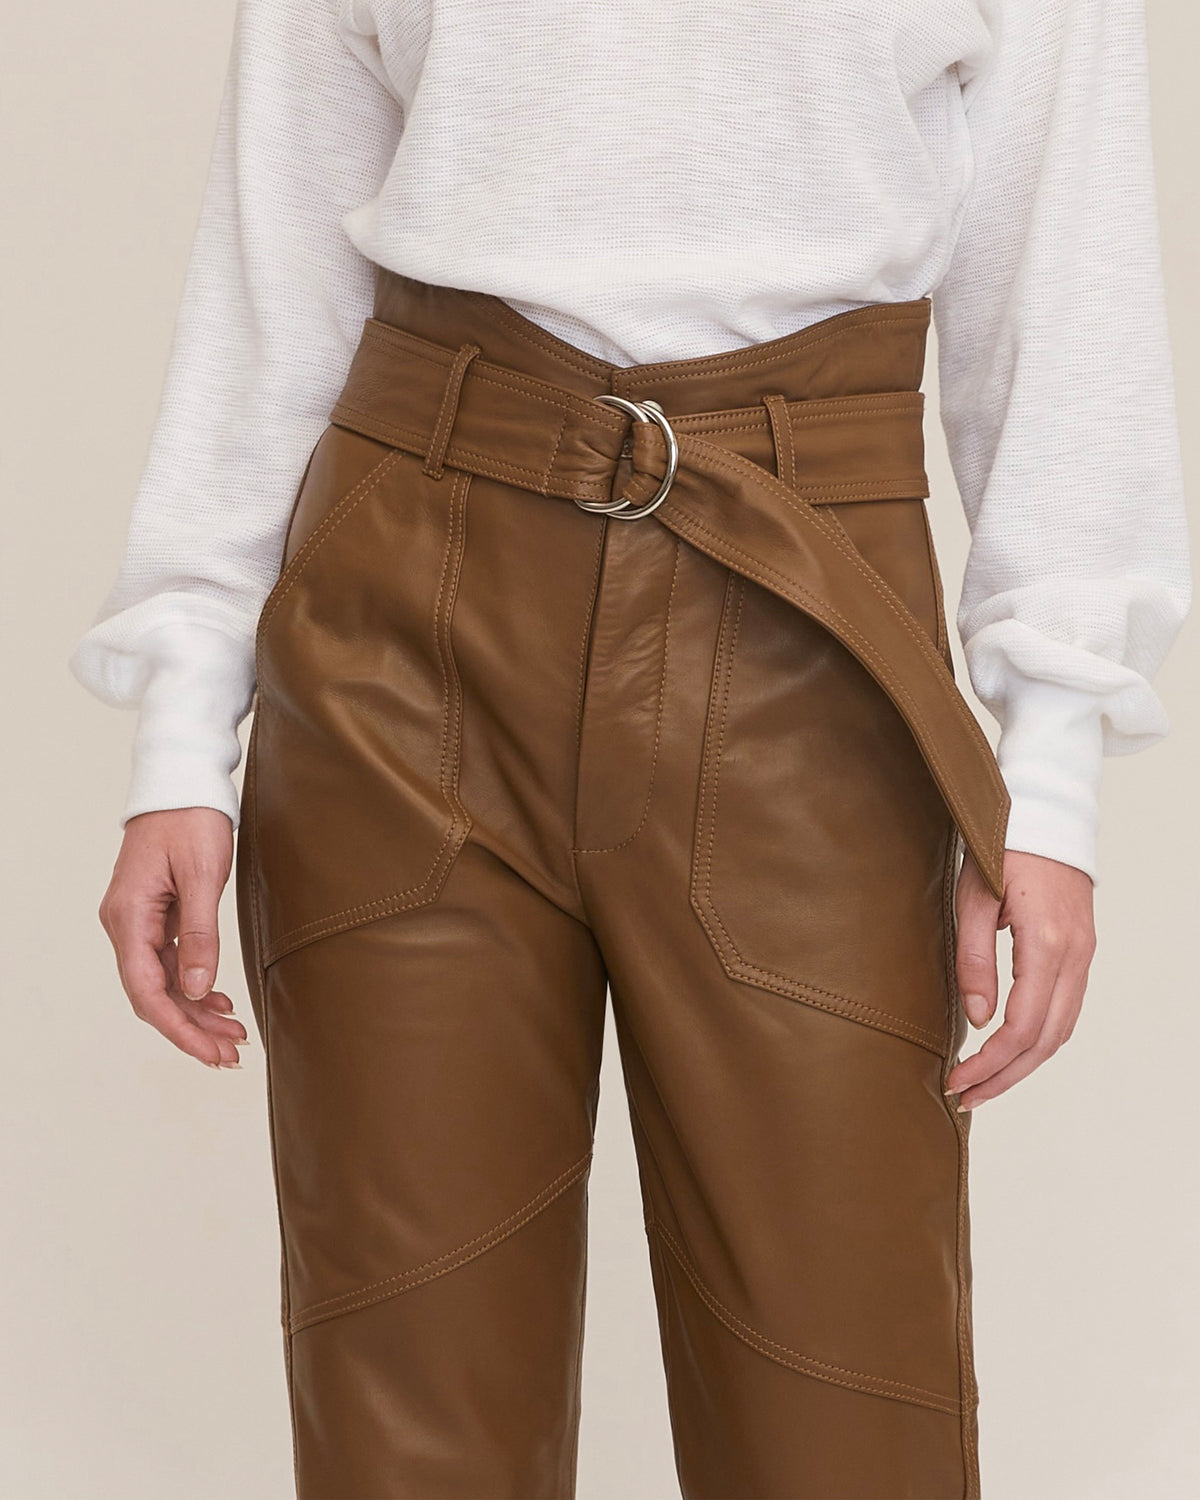 Patch Pocket Leather Pant in Sandstone | Sample Sale | MARISSA WEBB